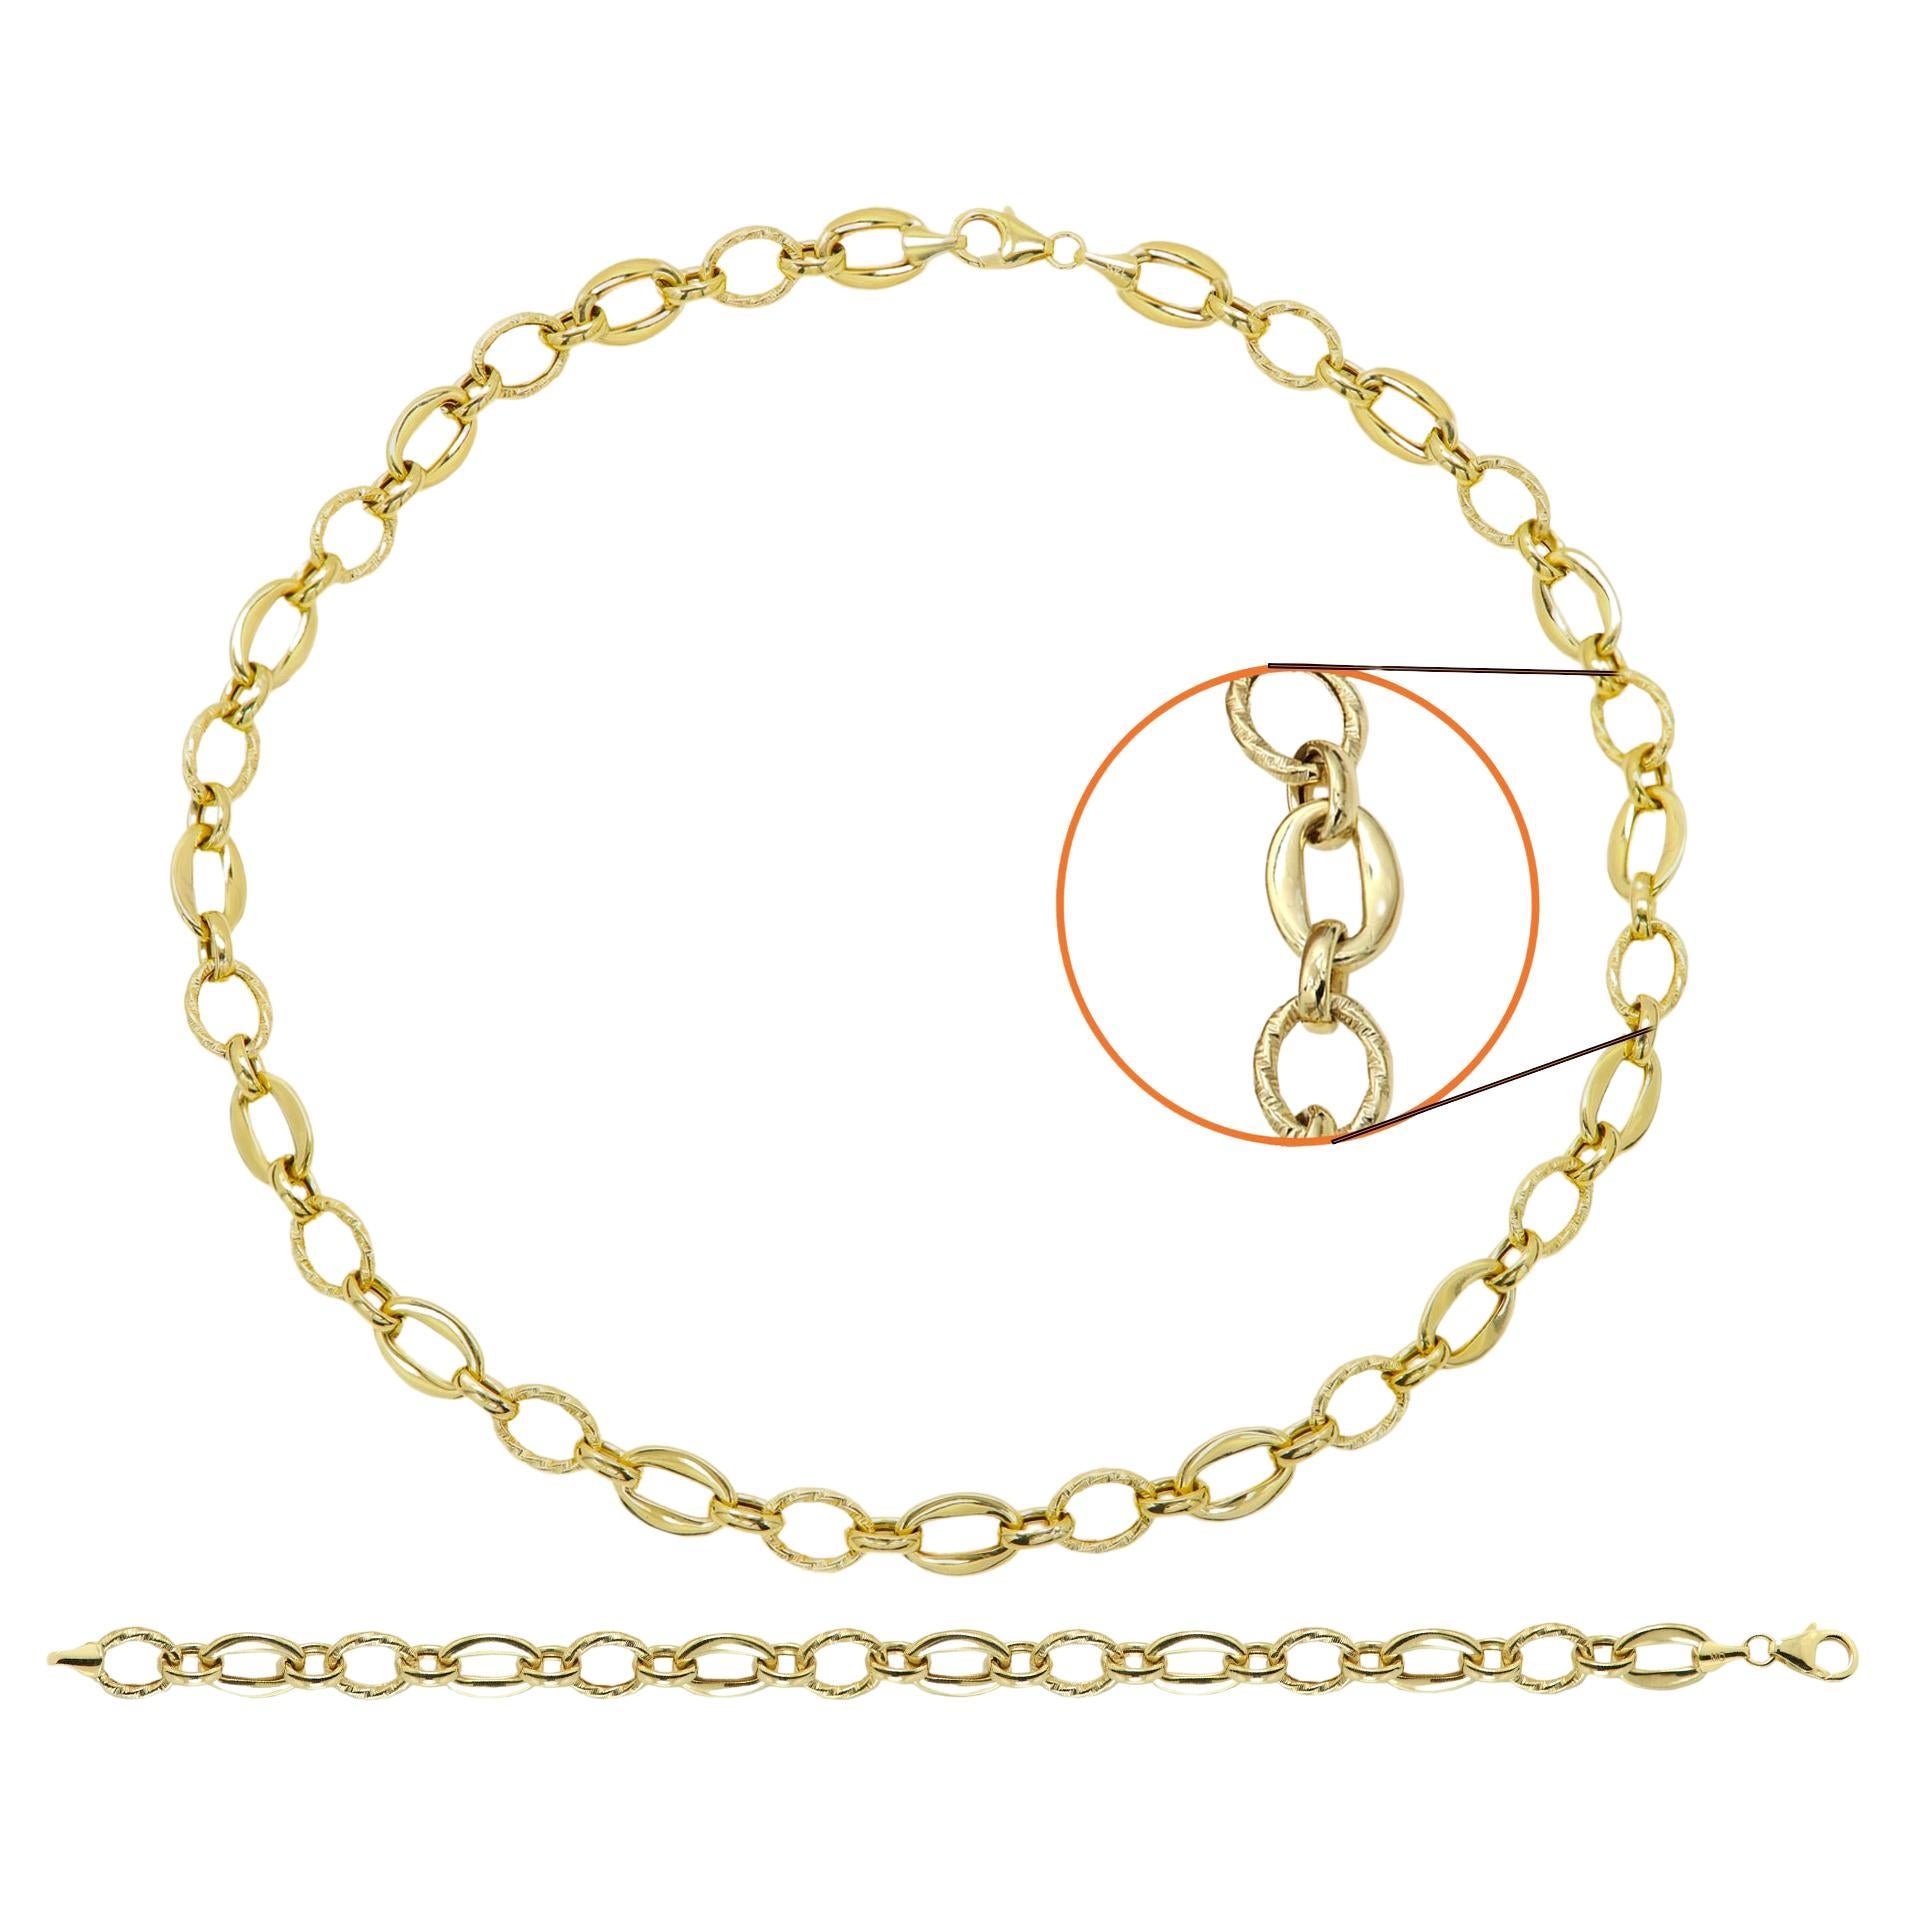 Italian Creative Link Chain set Necklace and Bracelet 14 Karat Yellow Gold Links